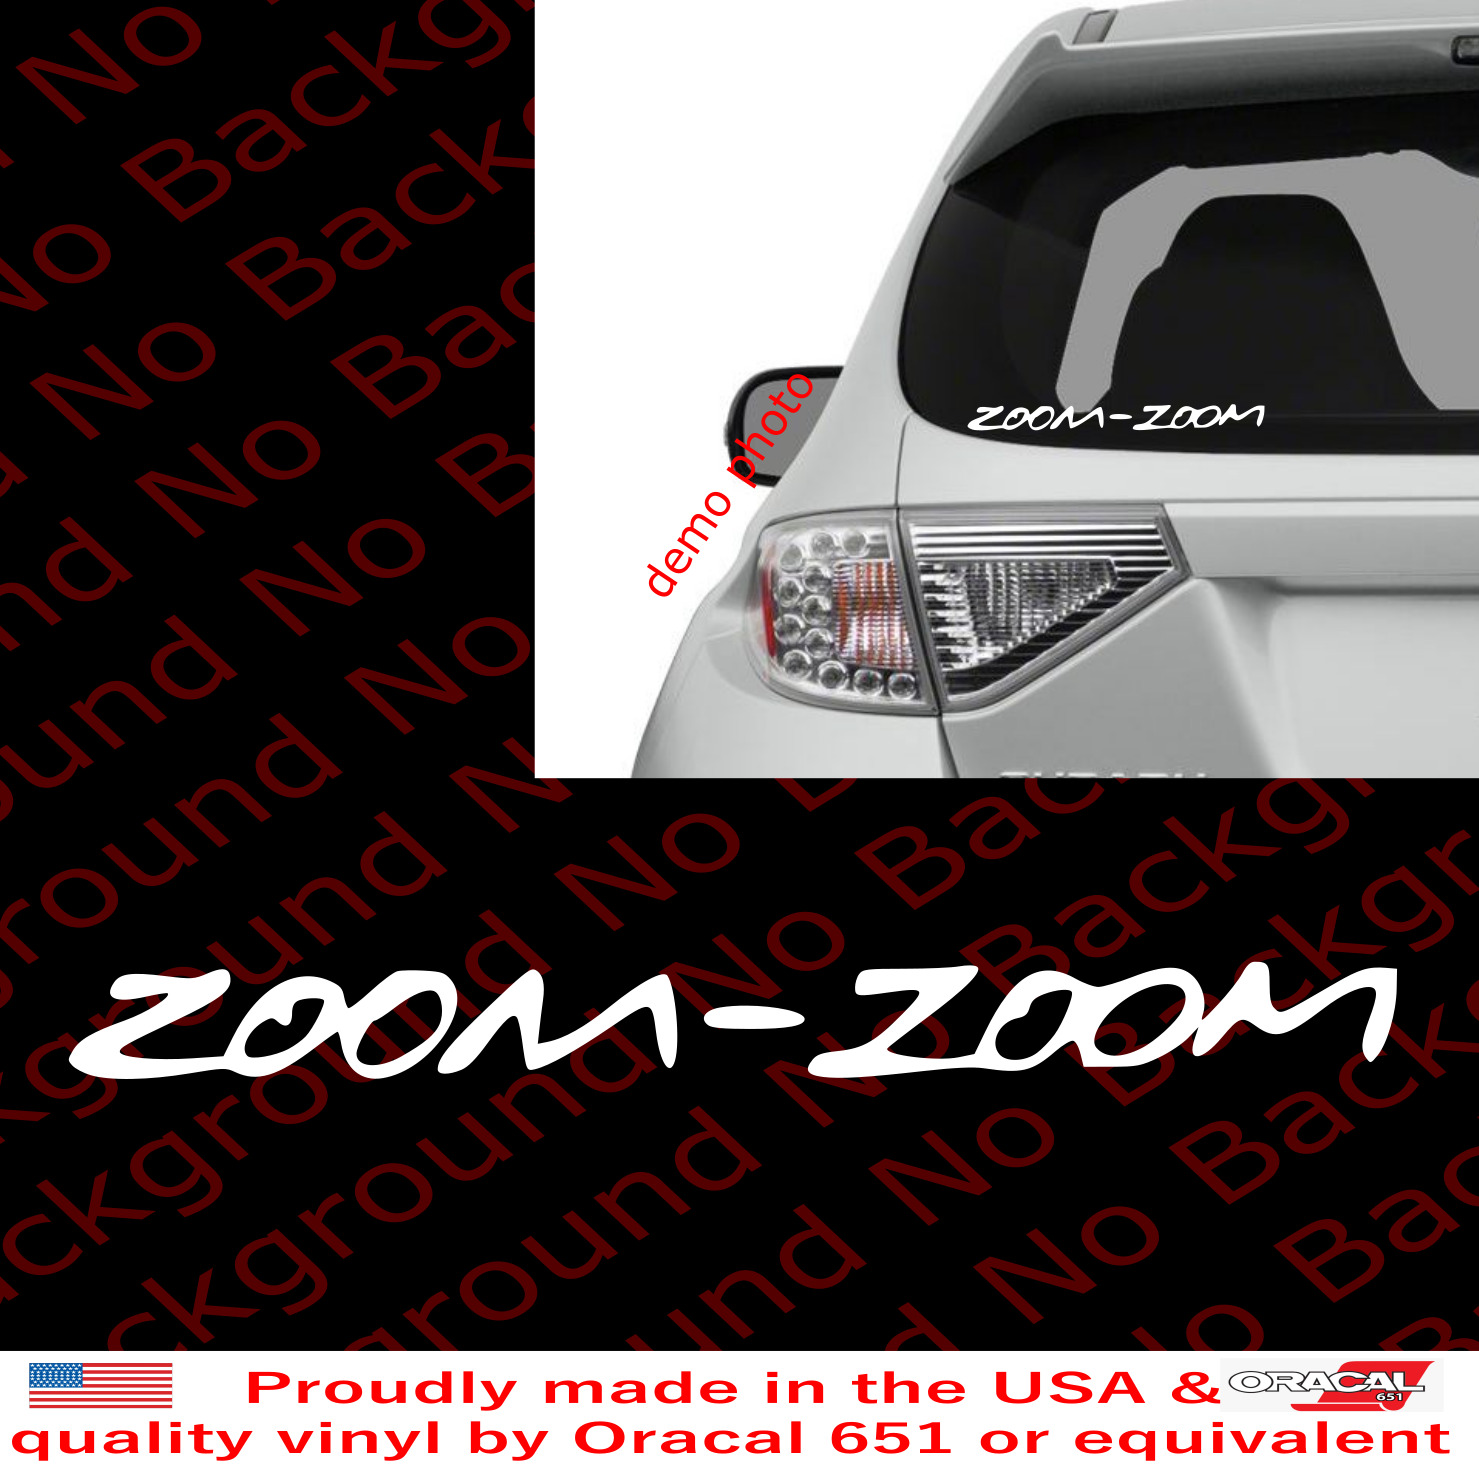 Zoom-Zoom Sticker Vinyl Die Cut Decal Funny zoom zoom for Car Truck Window FY089